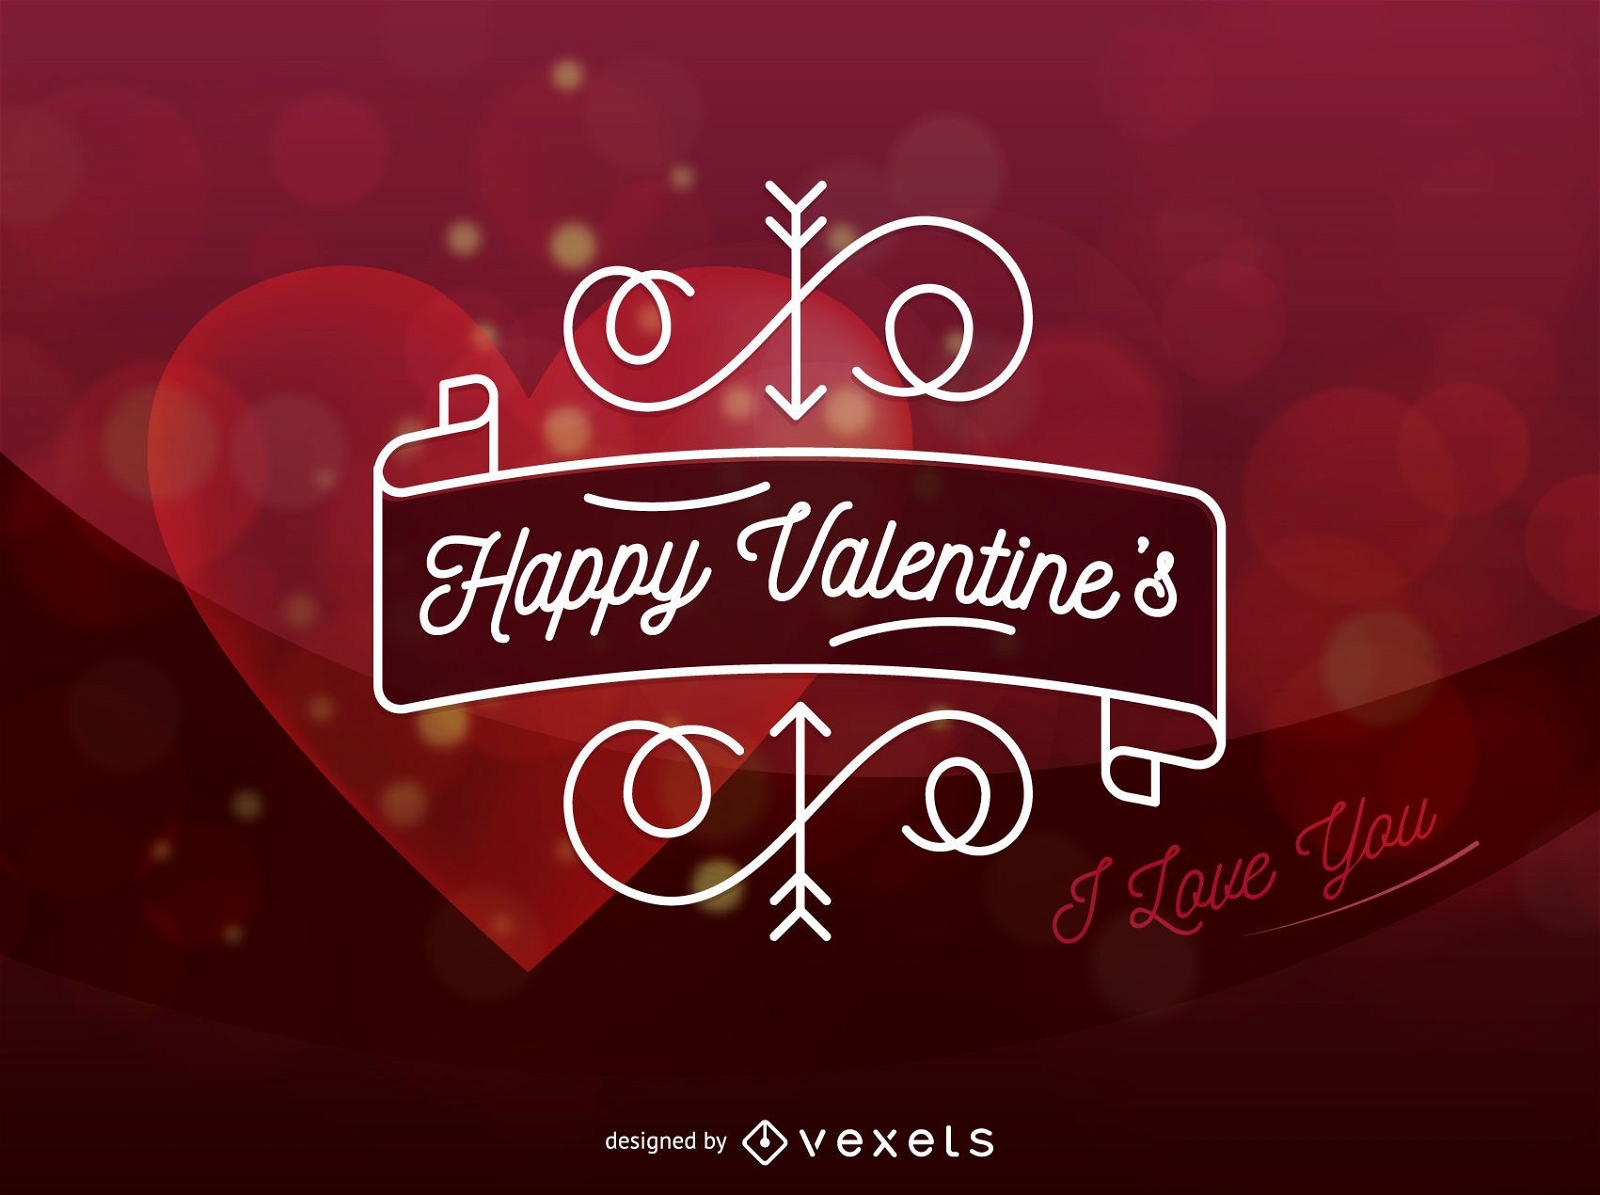 Happy Valentine's Day Heart Vector Card - Vector download1701 x 1270